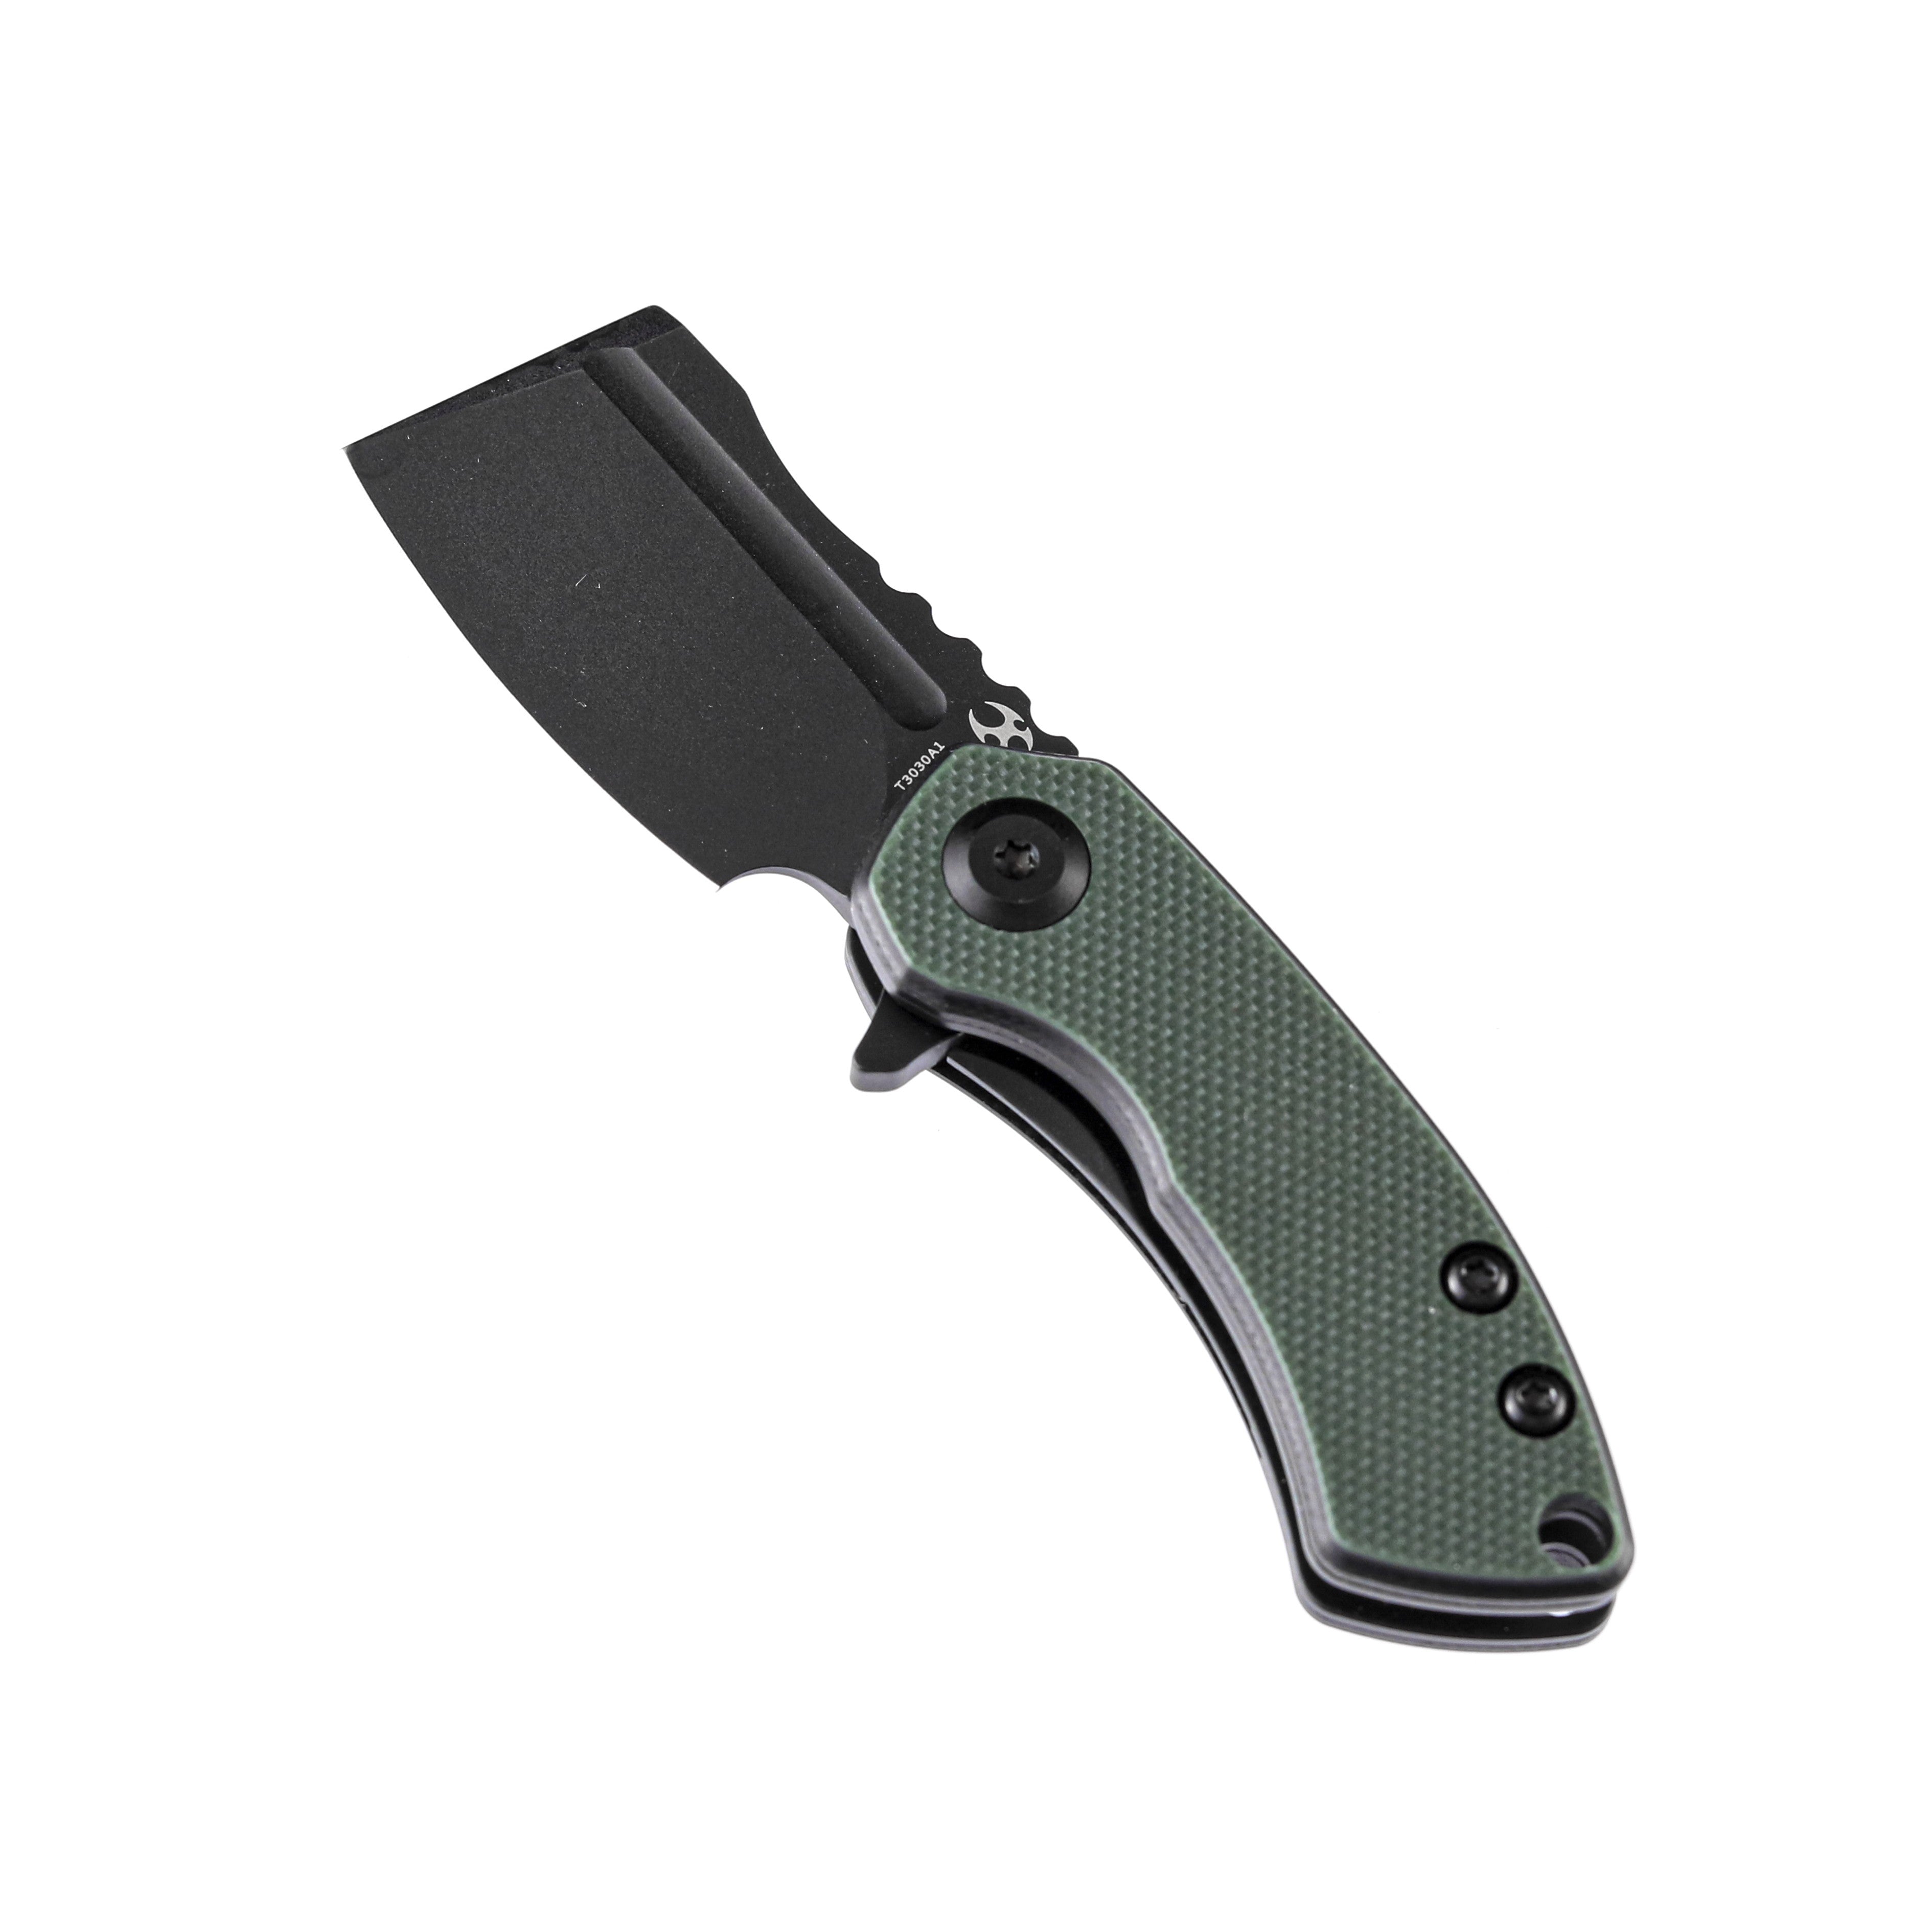 Kansept Knives T3030A1 Mini Korvid 154CM Blade Blackish Green G10 Handle Liner Lock Edc Knives